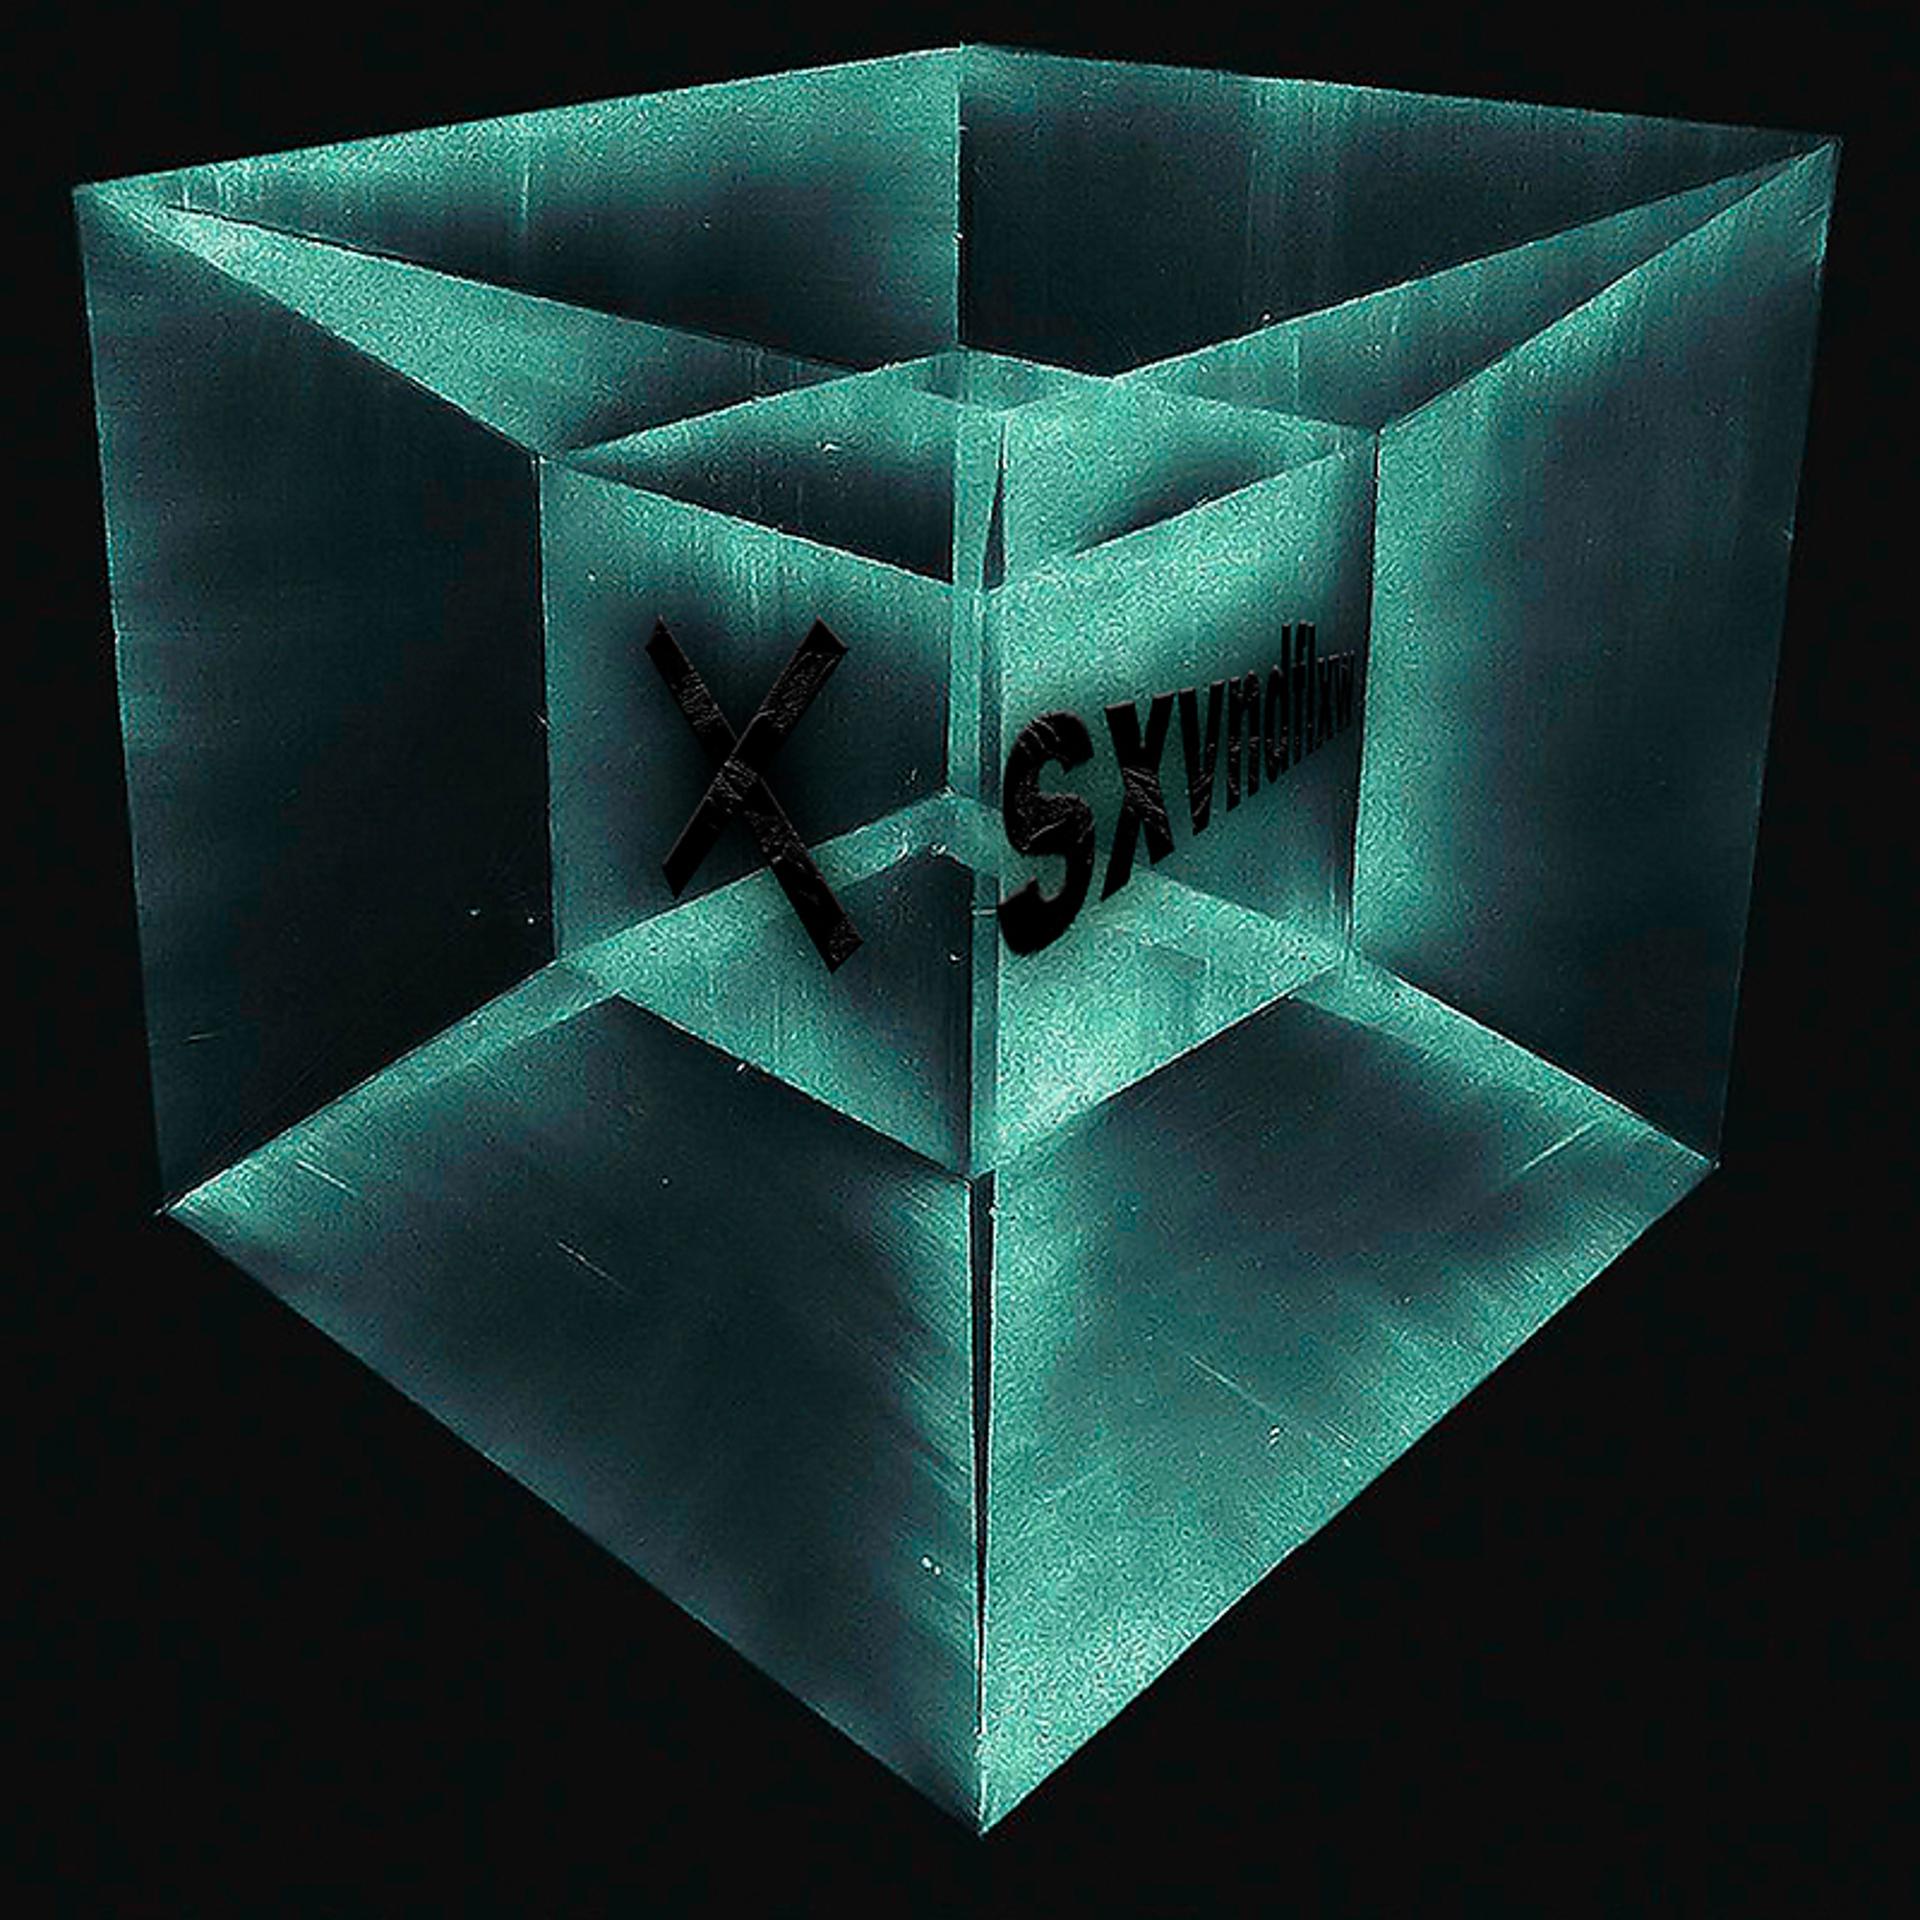 Постер альбома Tesseract